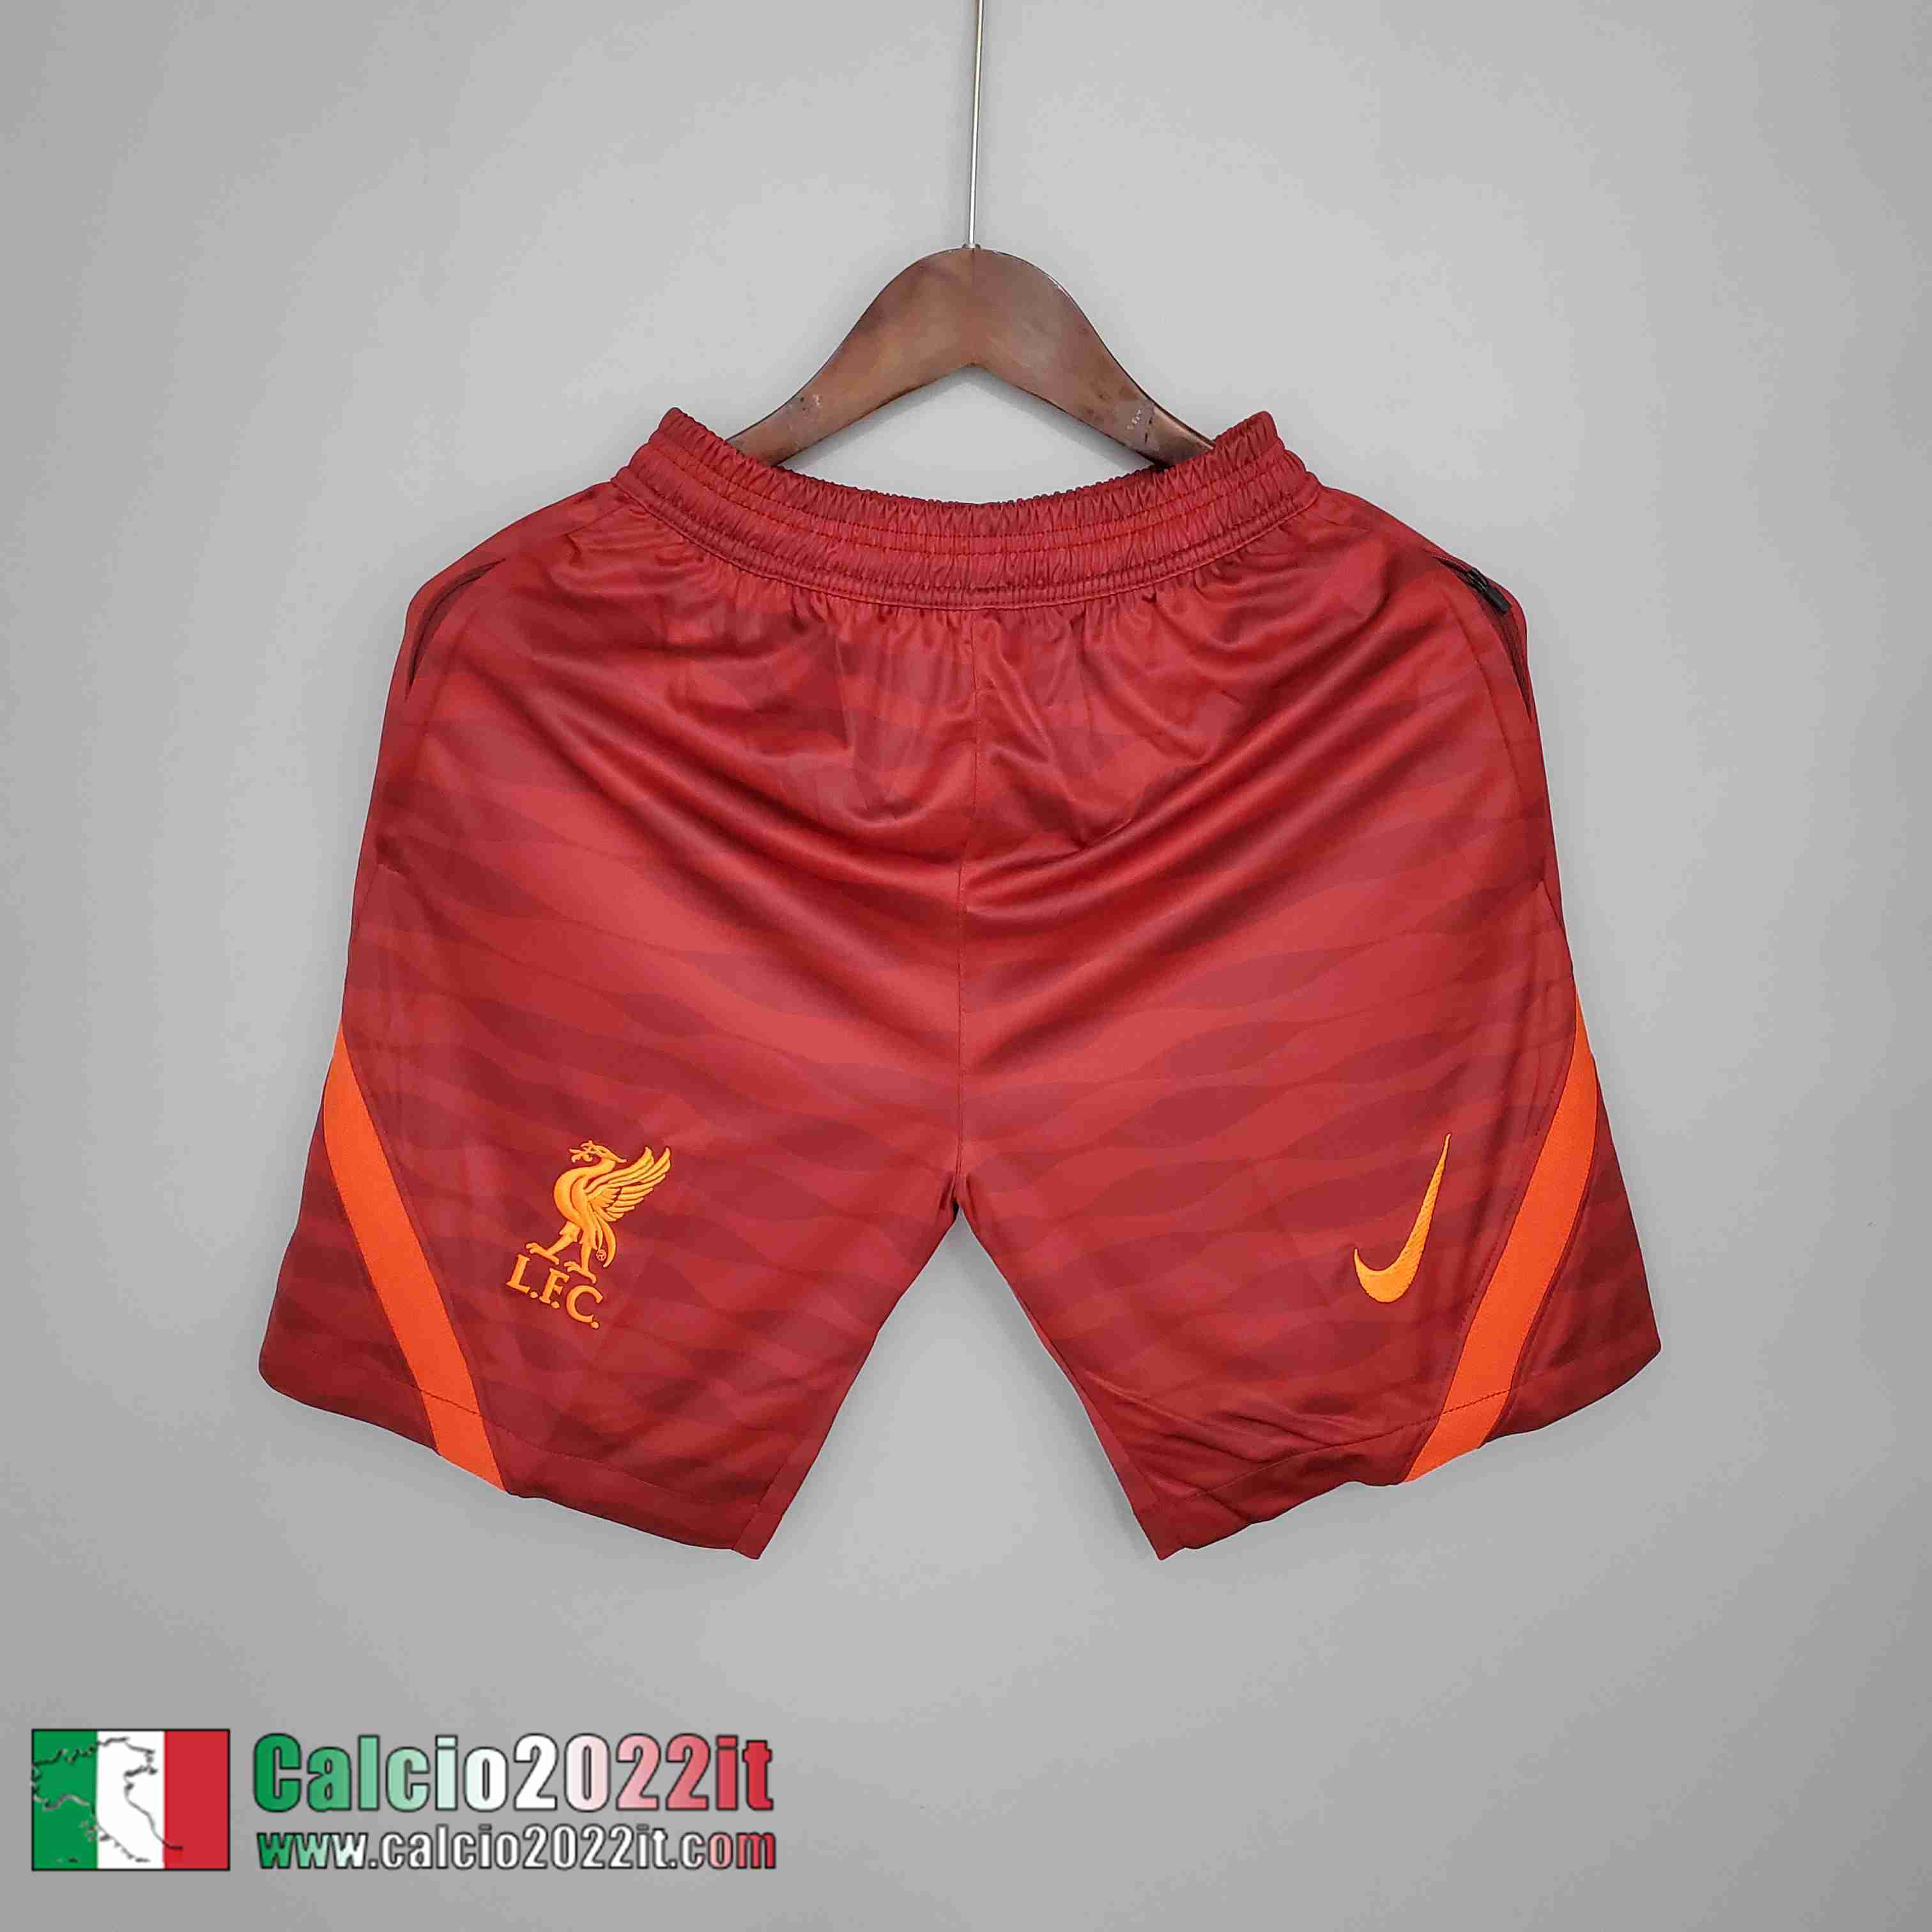 Liverpool Pantaloncini Calcio Uomo rosso DK23 2021 2022